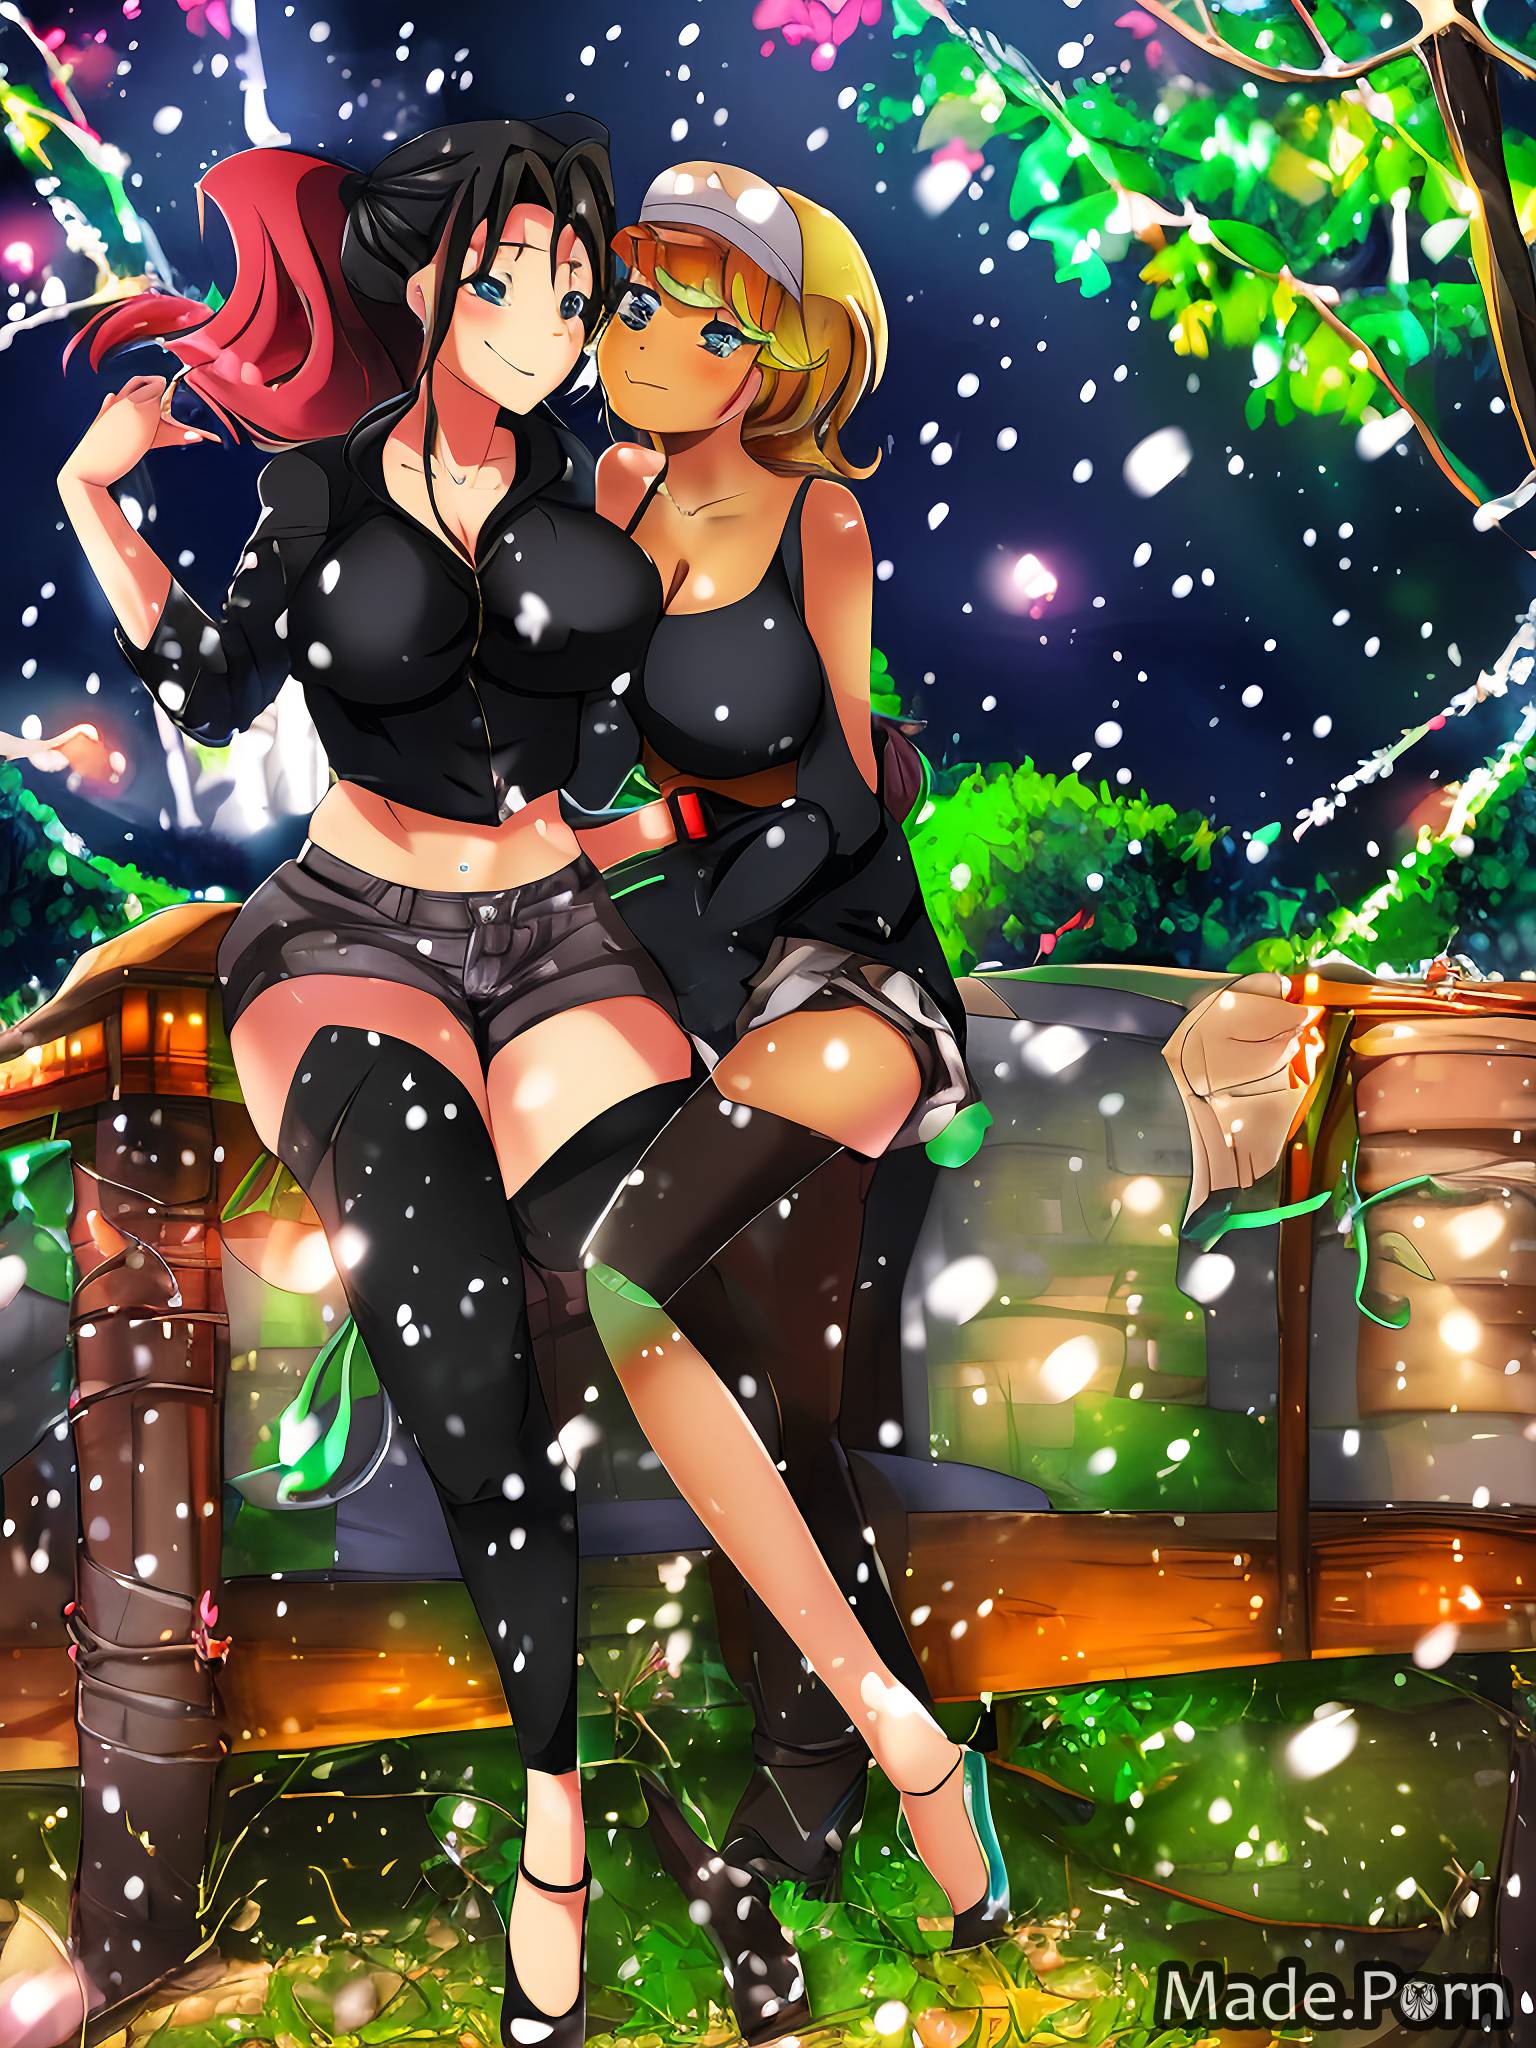 Anime Group Tits - Porn image of big tits lesbian snowfall happy anime club black created by AI